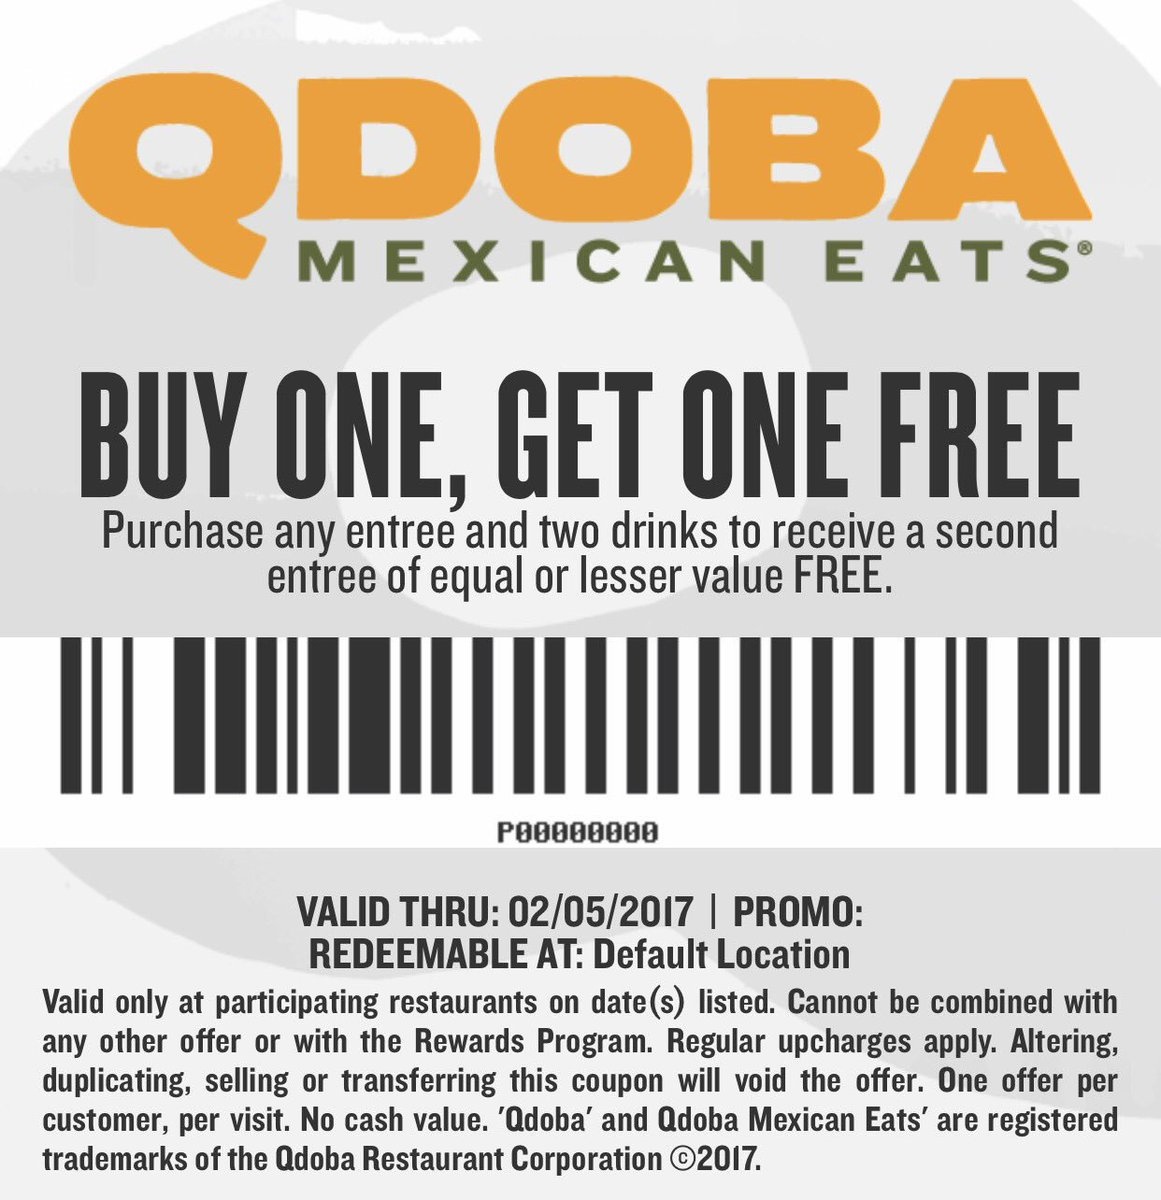 Qdoba Online Coupons | Printable Coupons Online - Bogo Free Coupons Printable